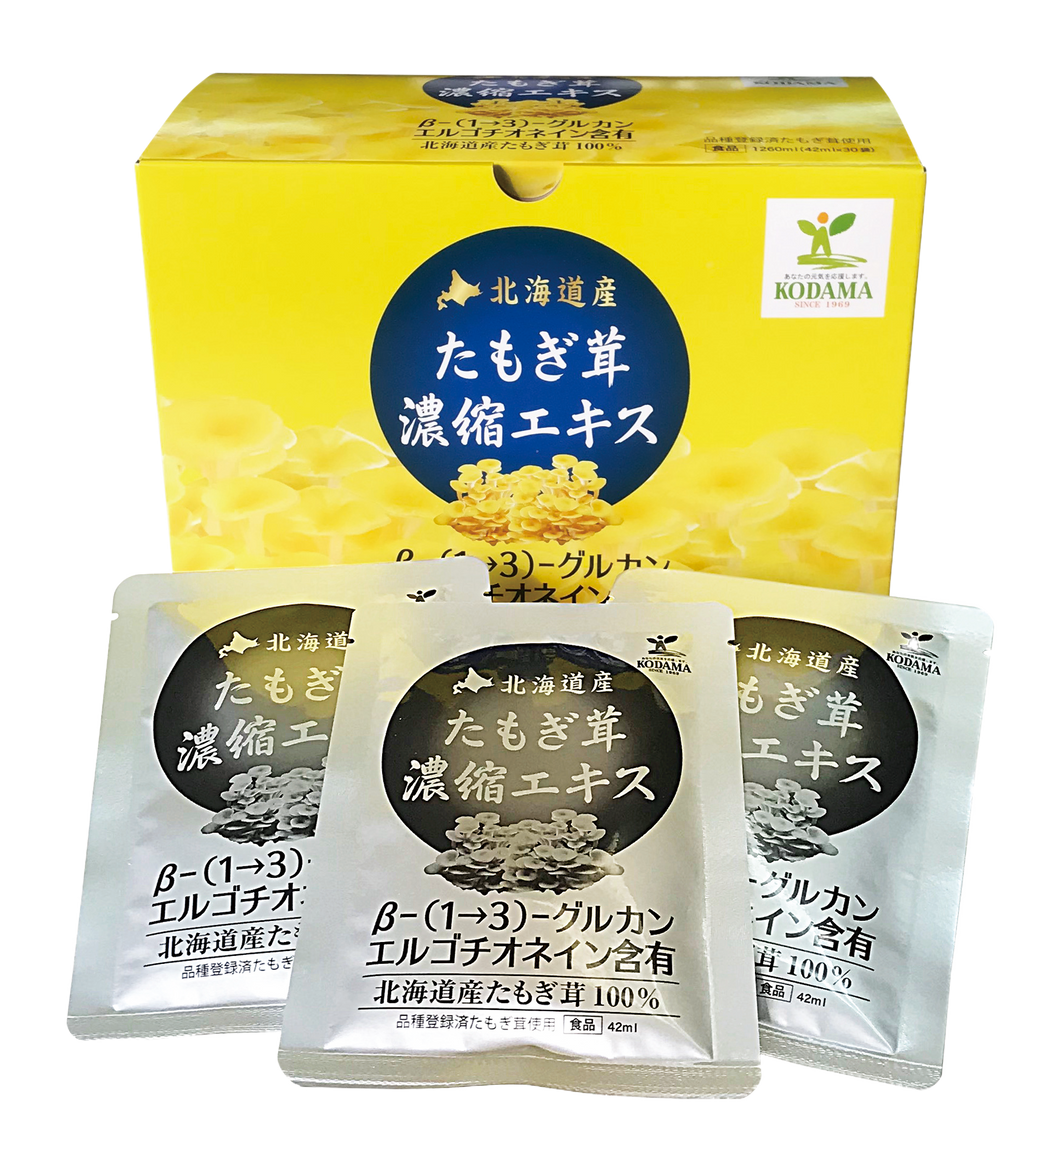 KODAMA Golden Oyster Mushroom Extract (42mg x 30 Packets)